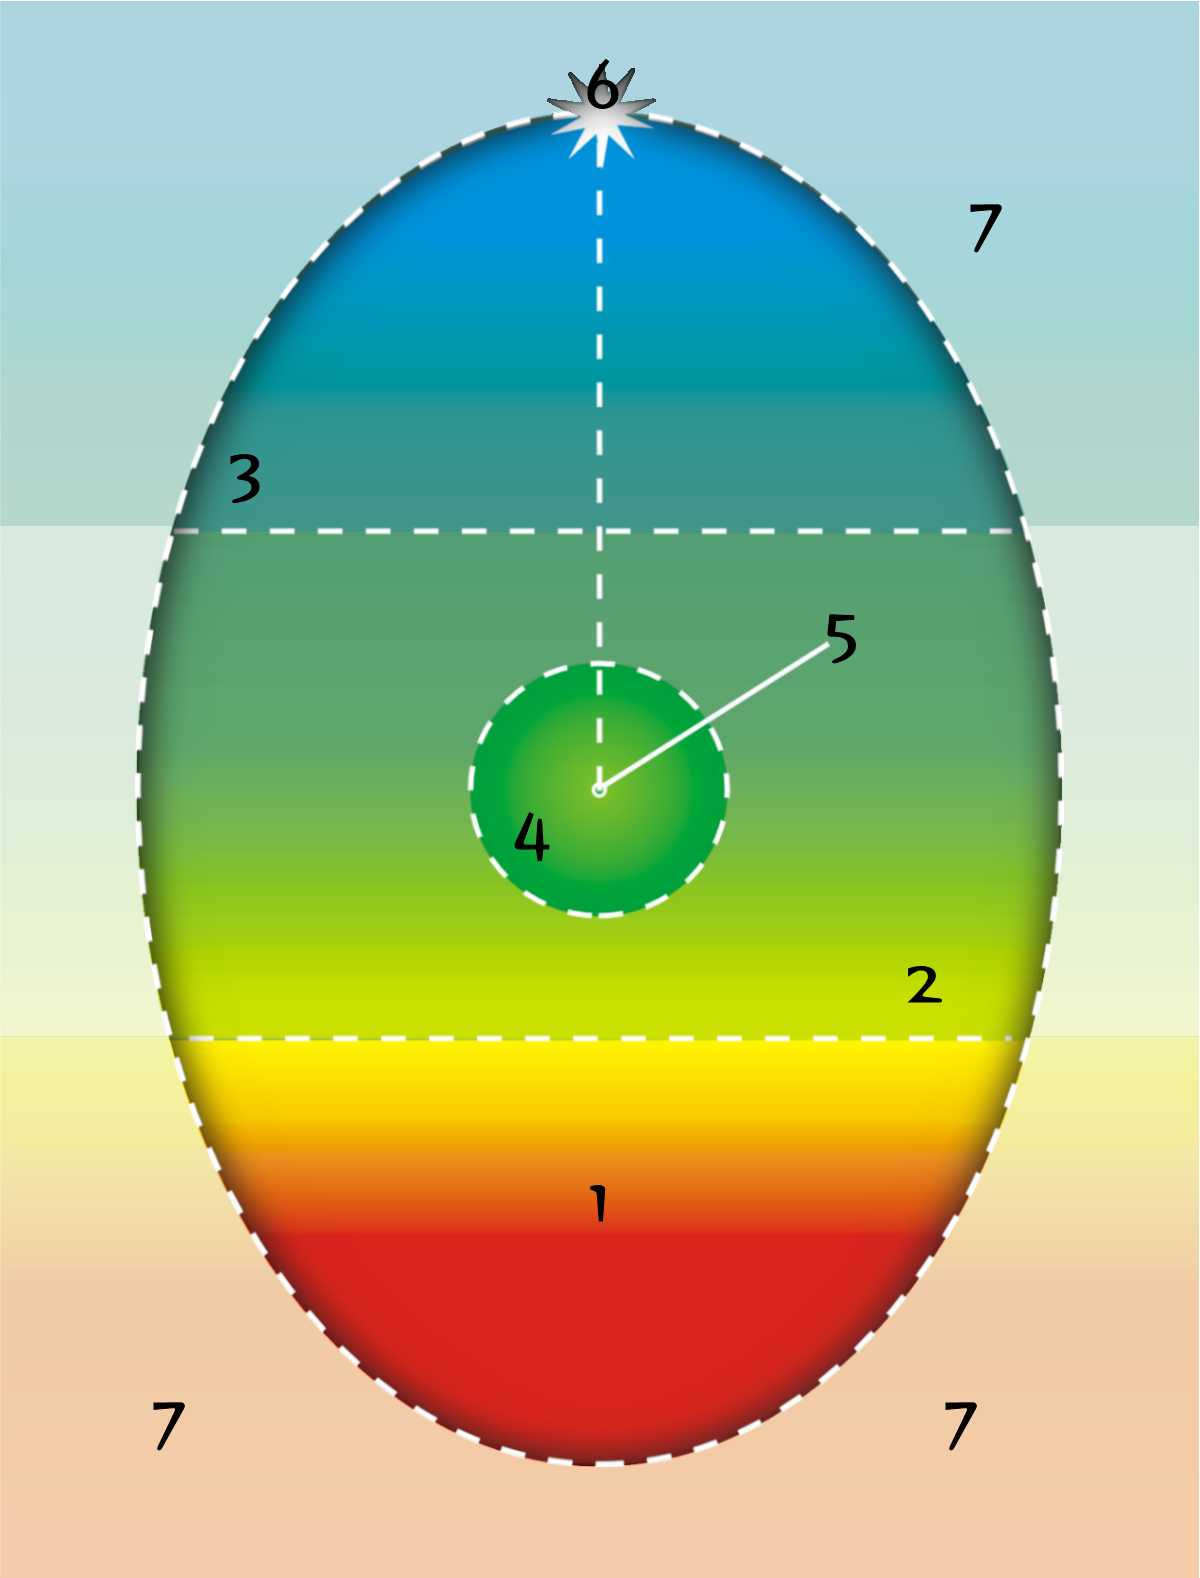 Assagioli Egg Diagram